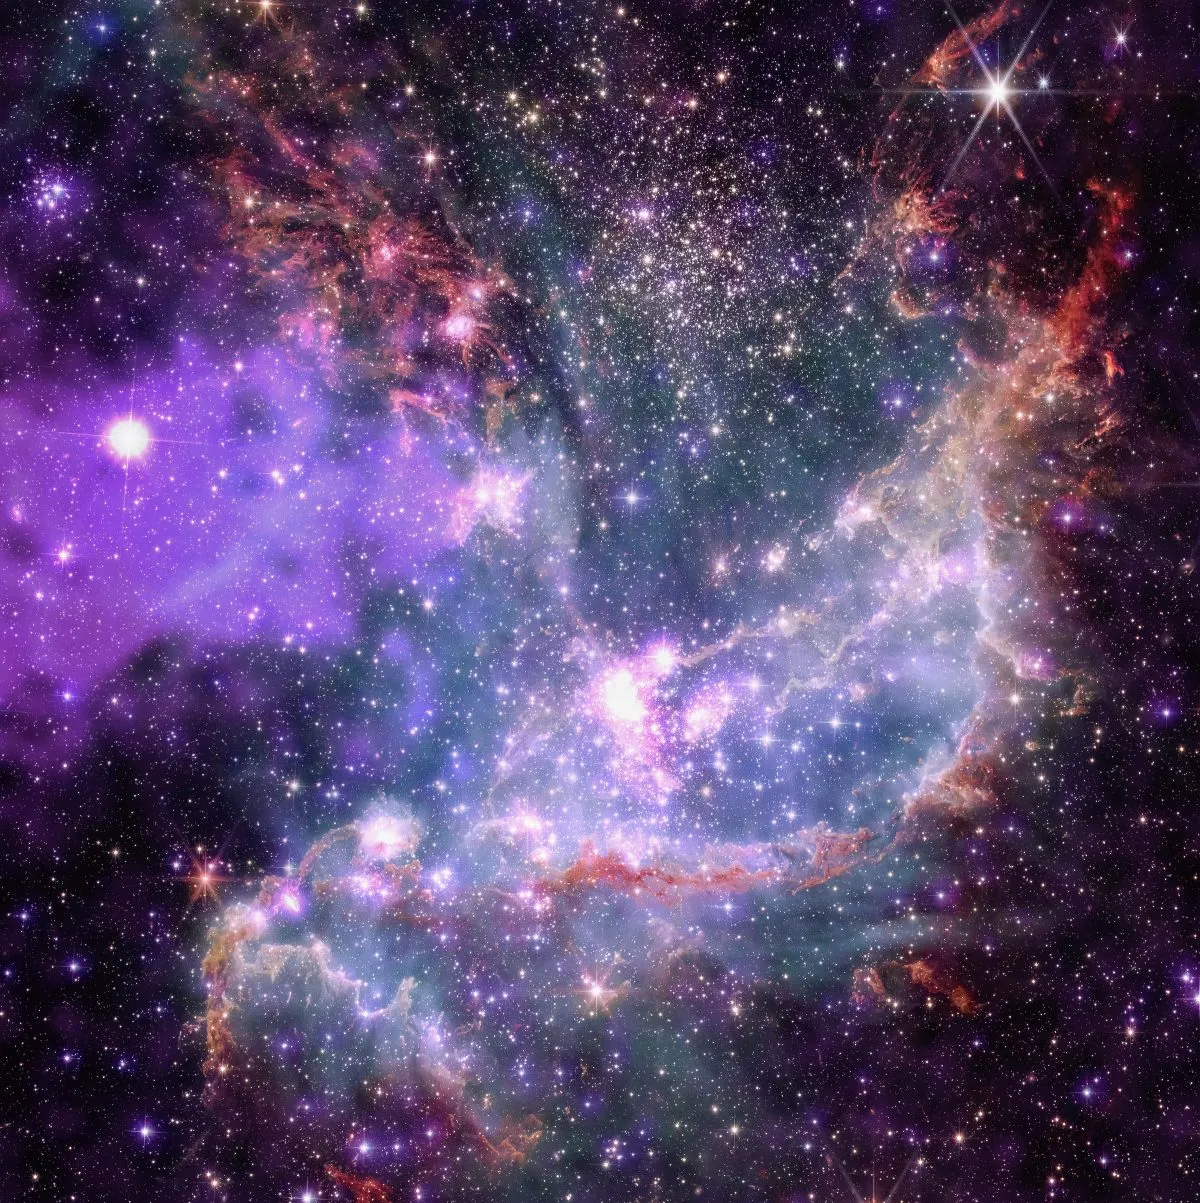 Star Cluster NGC 346, as seen by the Chandra X-ray Observatory and the James Webb Space Telescope. Credit: X-ray: Chandra: NASA/CXC/SAO, XMM: ESA/XMM-Newton; IR: JWST: NASA/ESA/CSA/STScI, Spitzer: NASA/JPL-Caltech; Optical: Hubble: NASA/ESA/STScI, ESO. Image Processing: L. Frattare, J. Major, and K. Arcand.